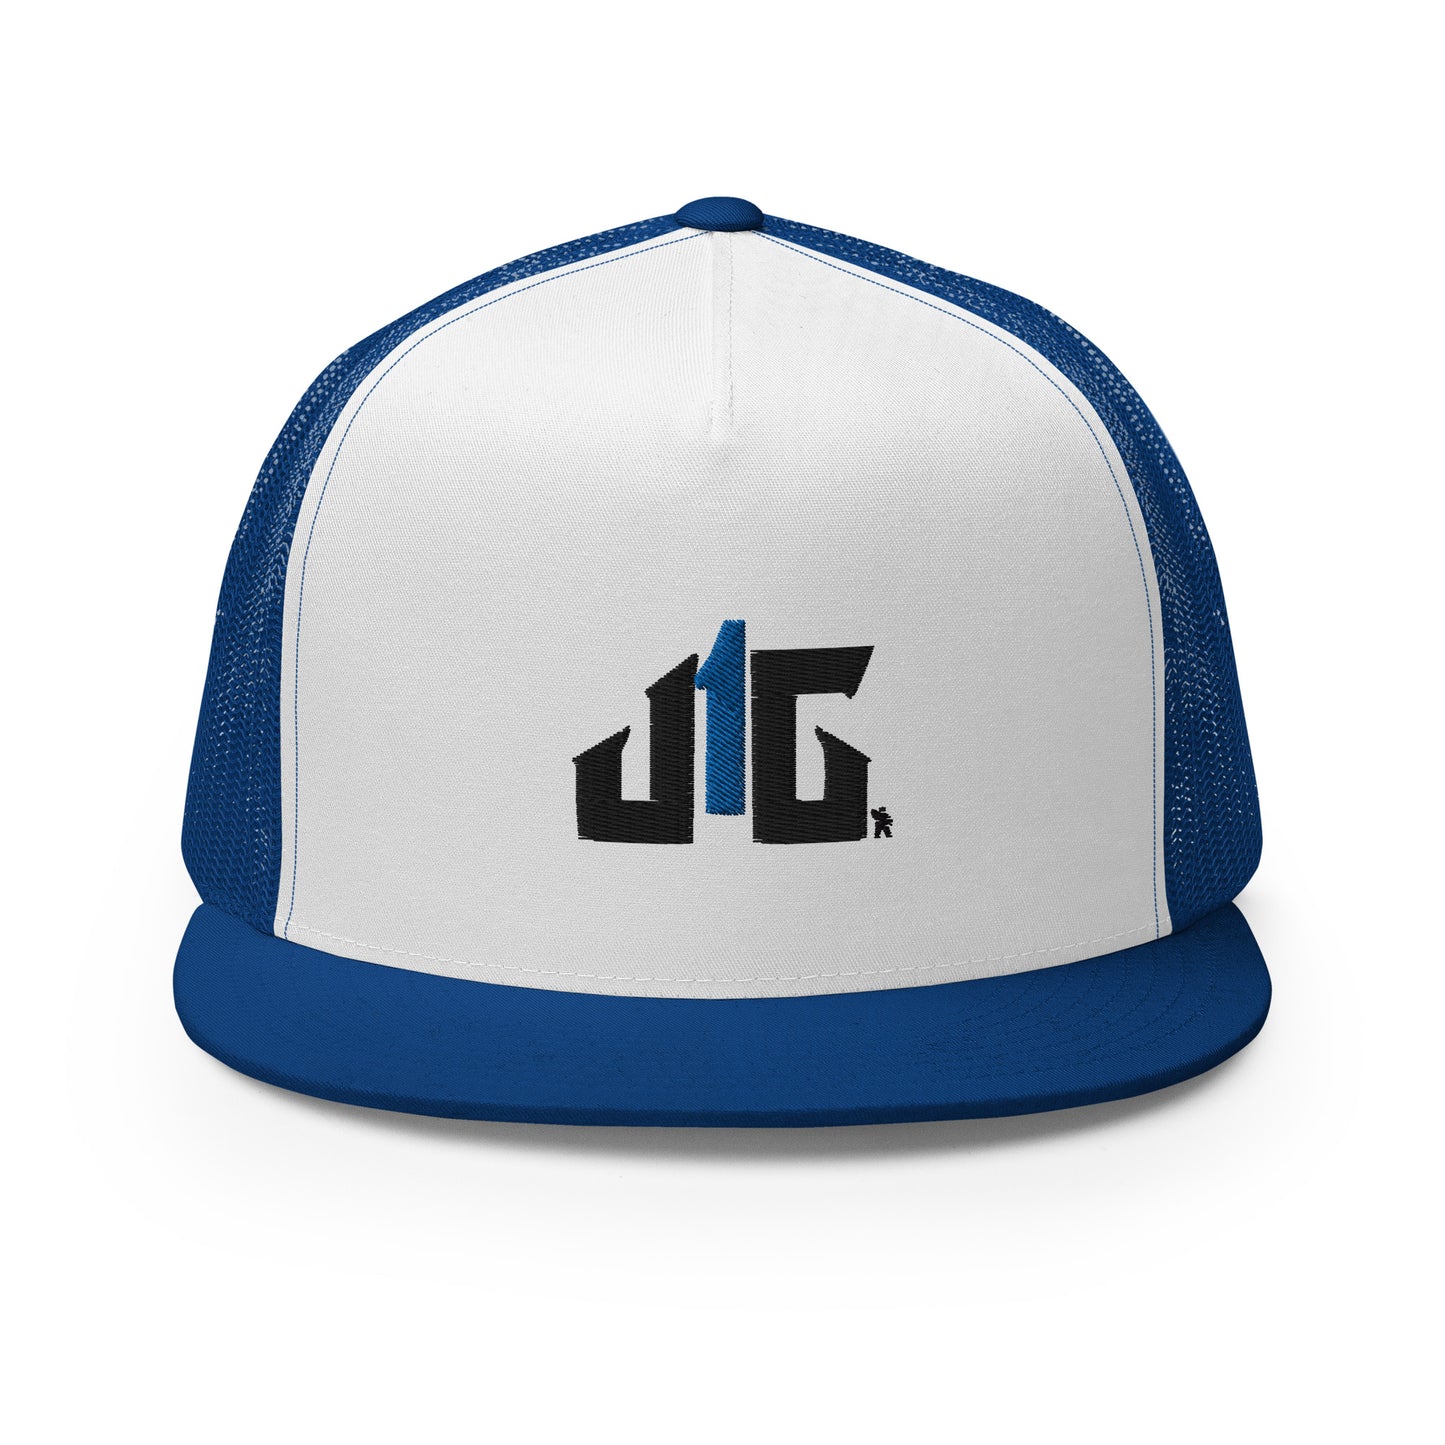 John Dickerson IV "J1G" Trucker Cap